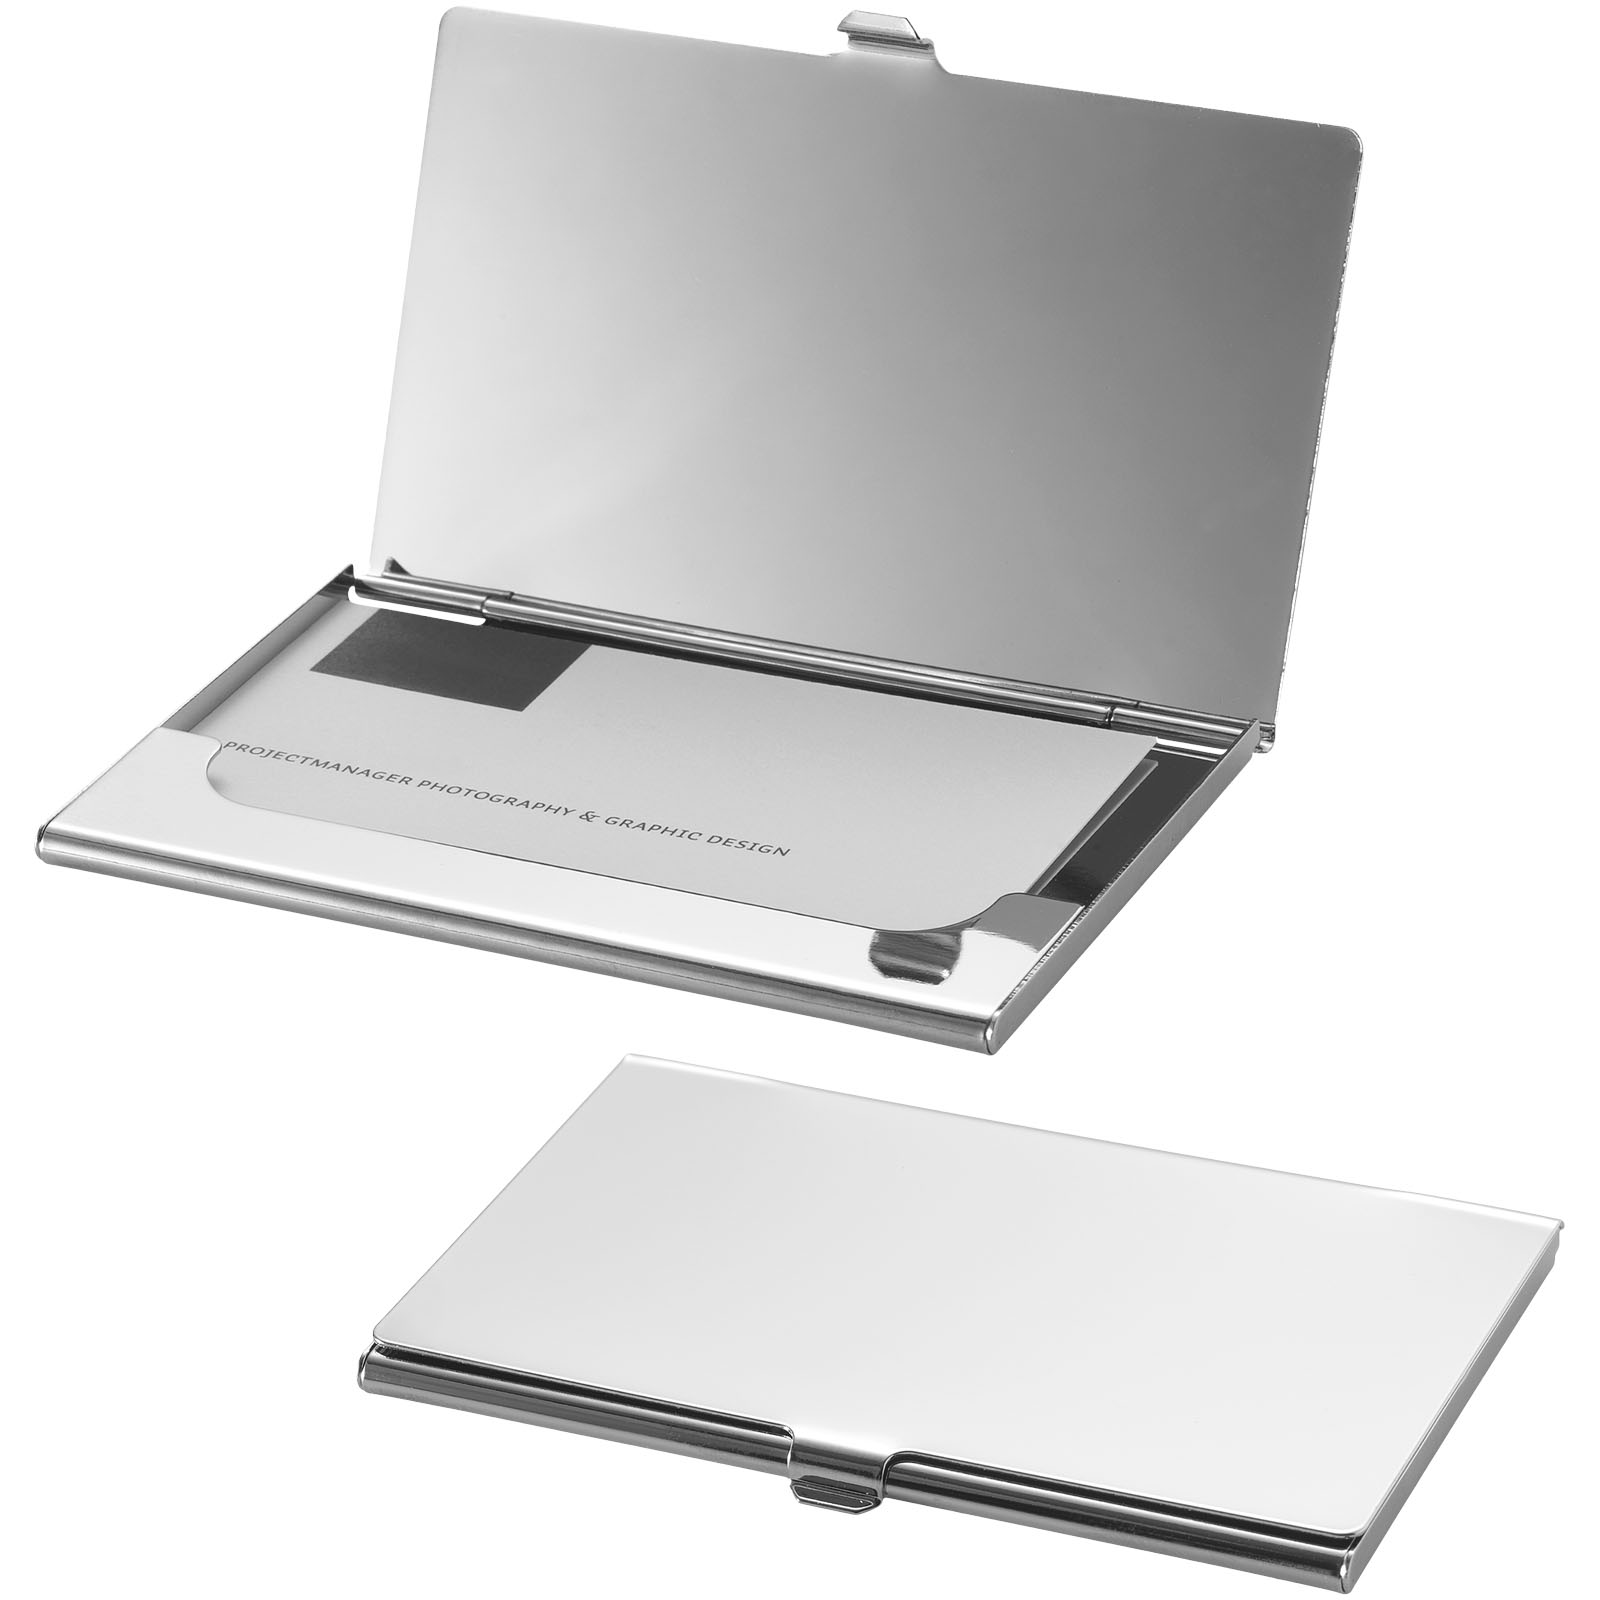 Notebooks & Desk Essentials - New York business card holder with mirror